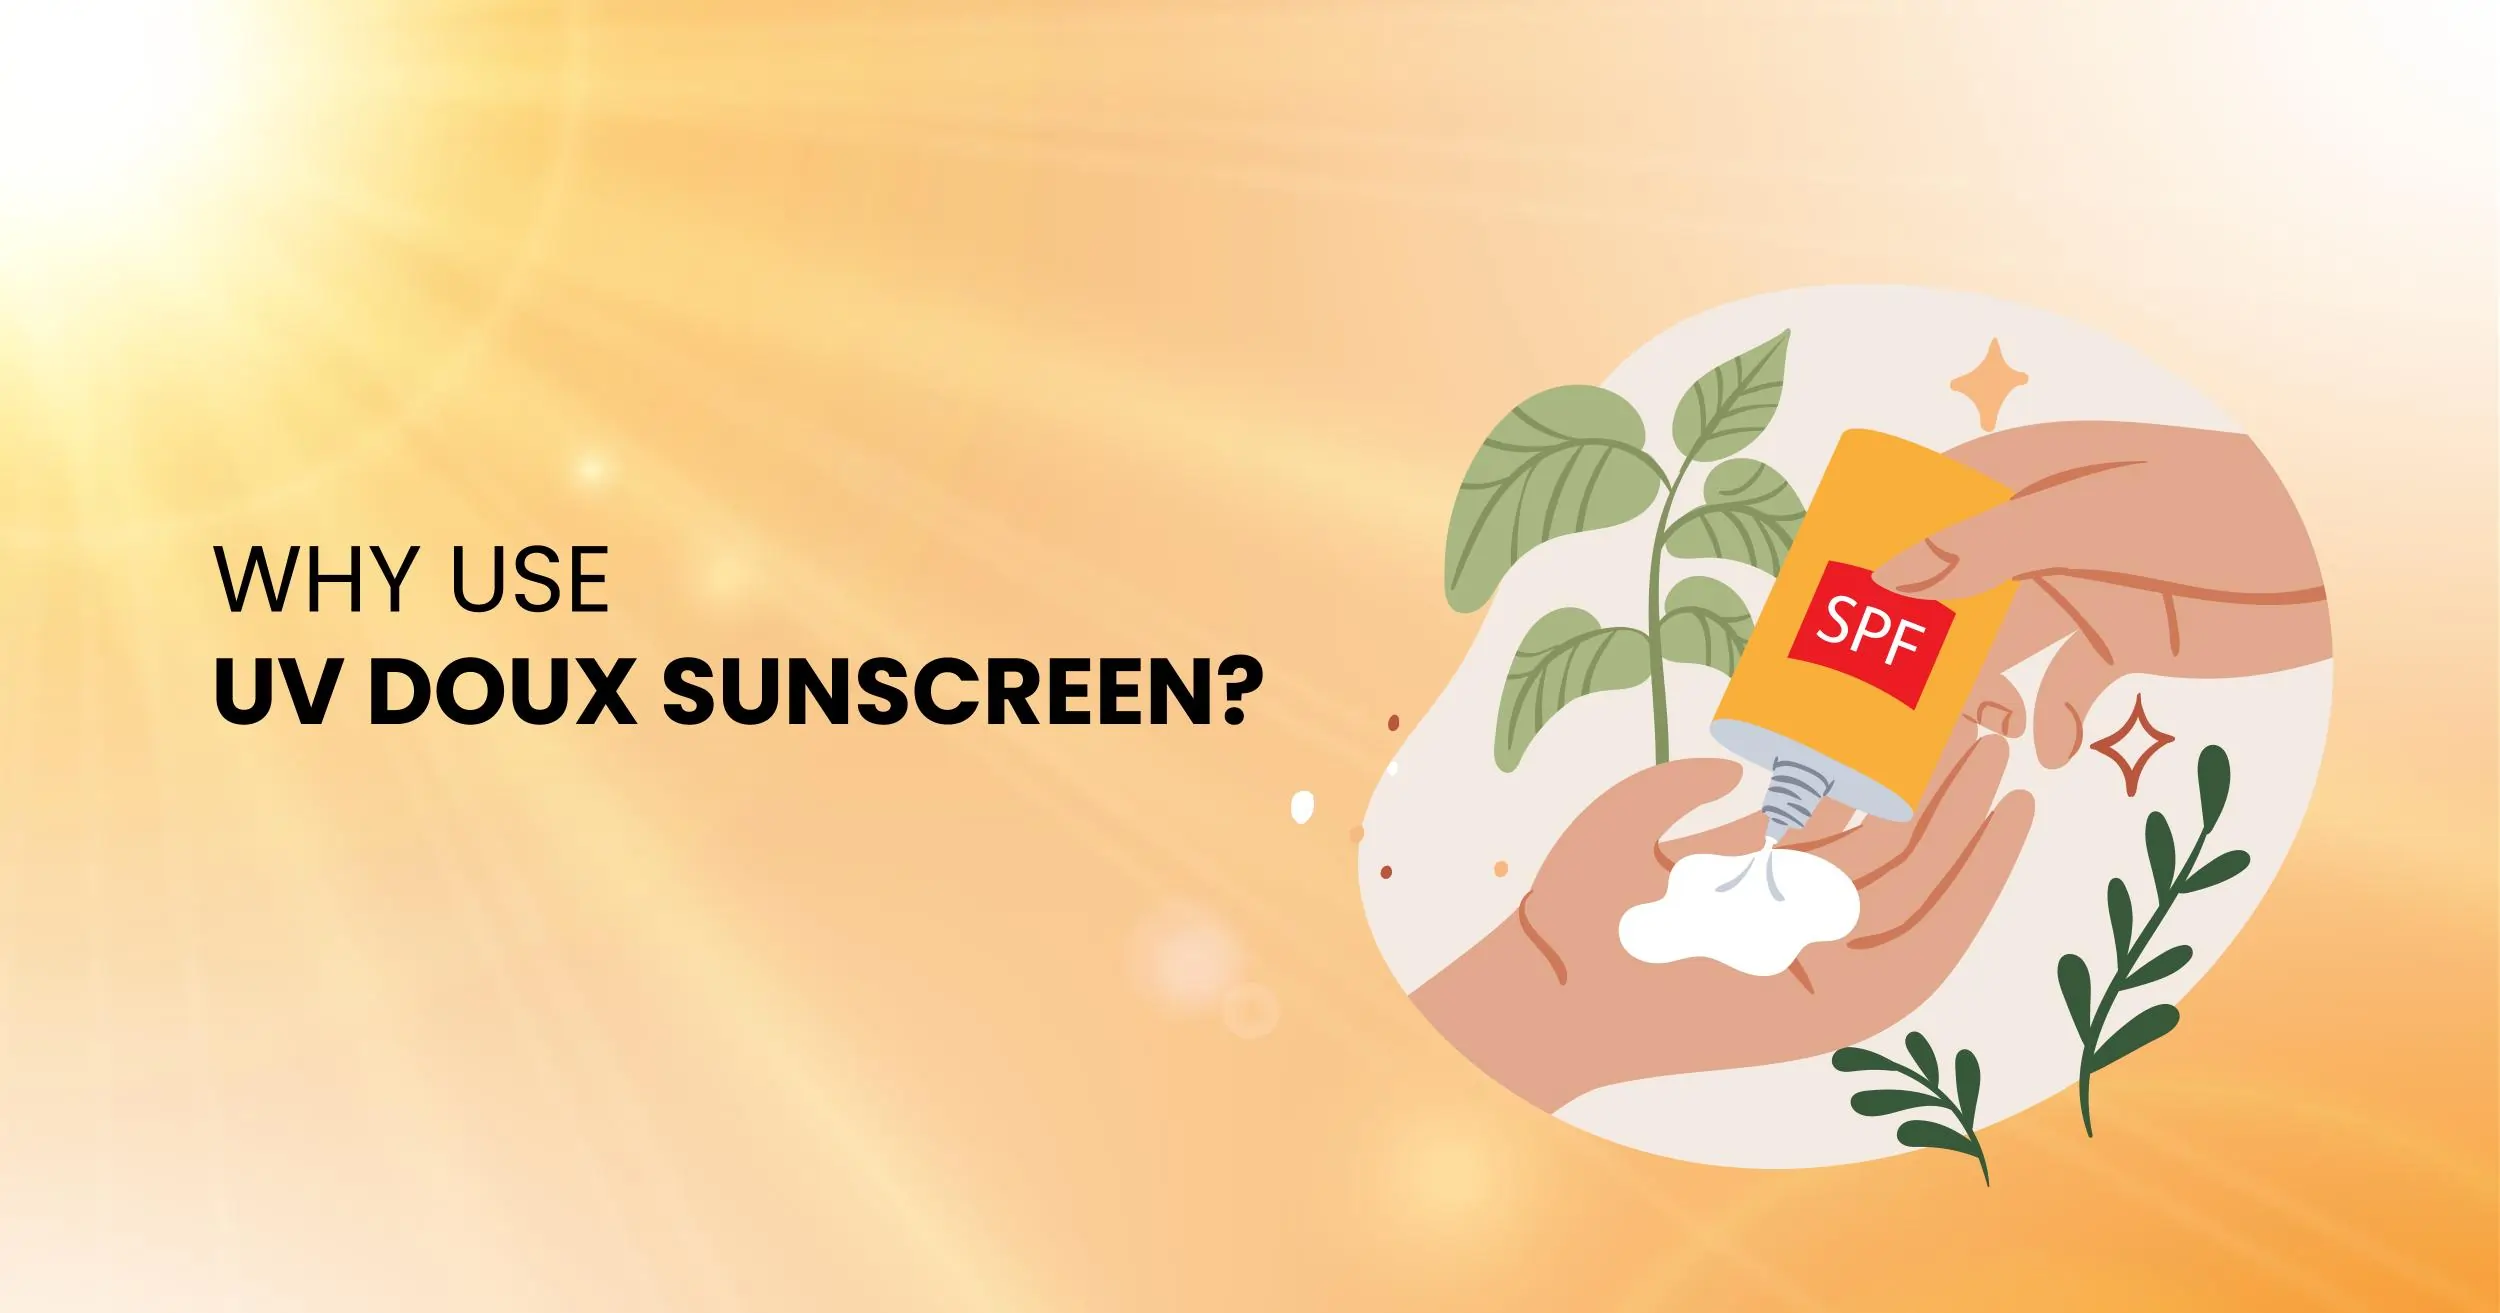 Why Use UV Doux Sunscreen?